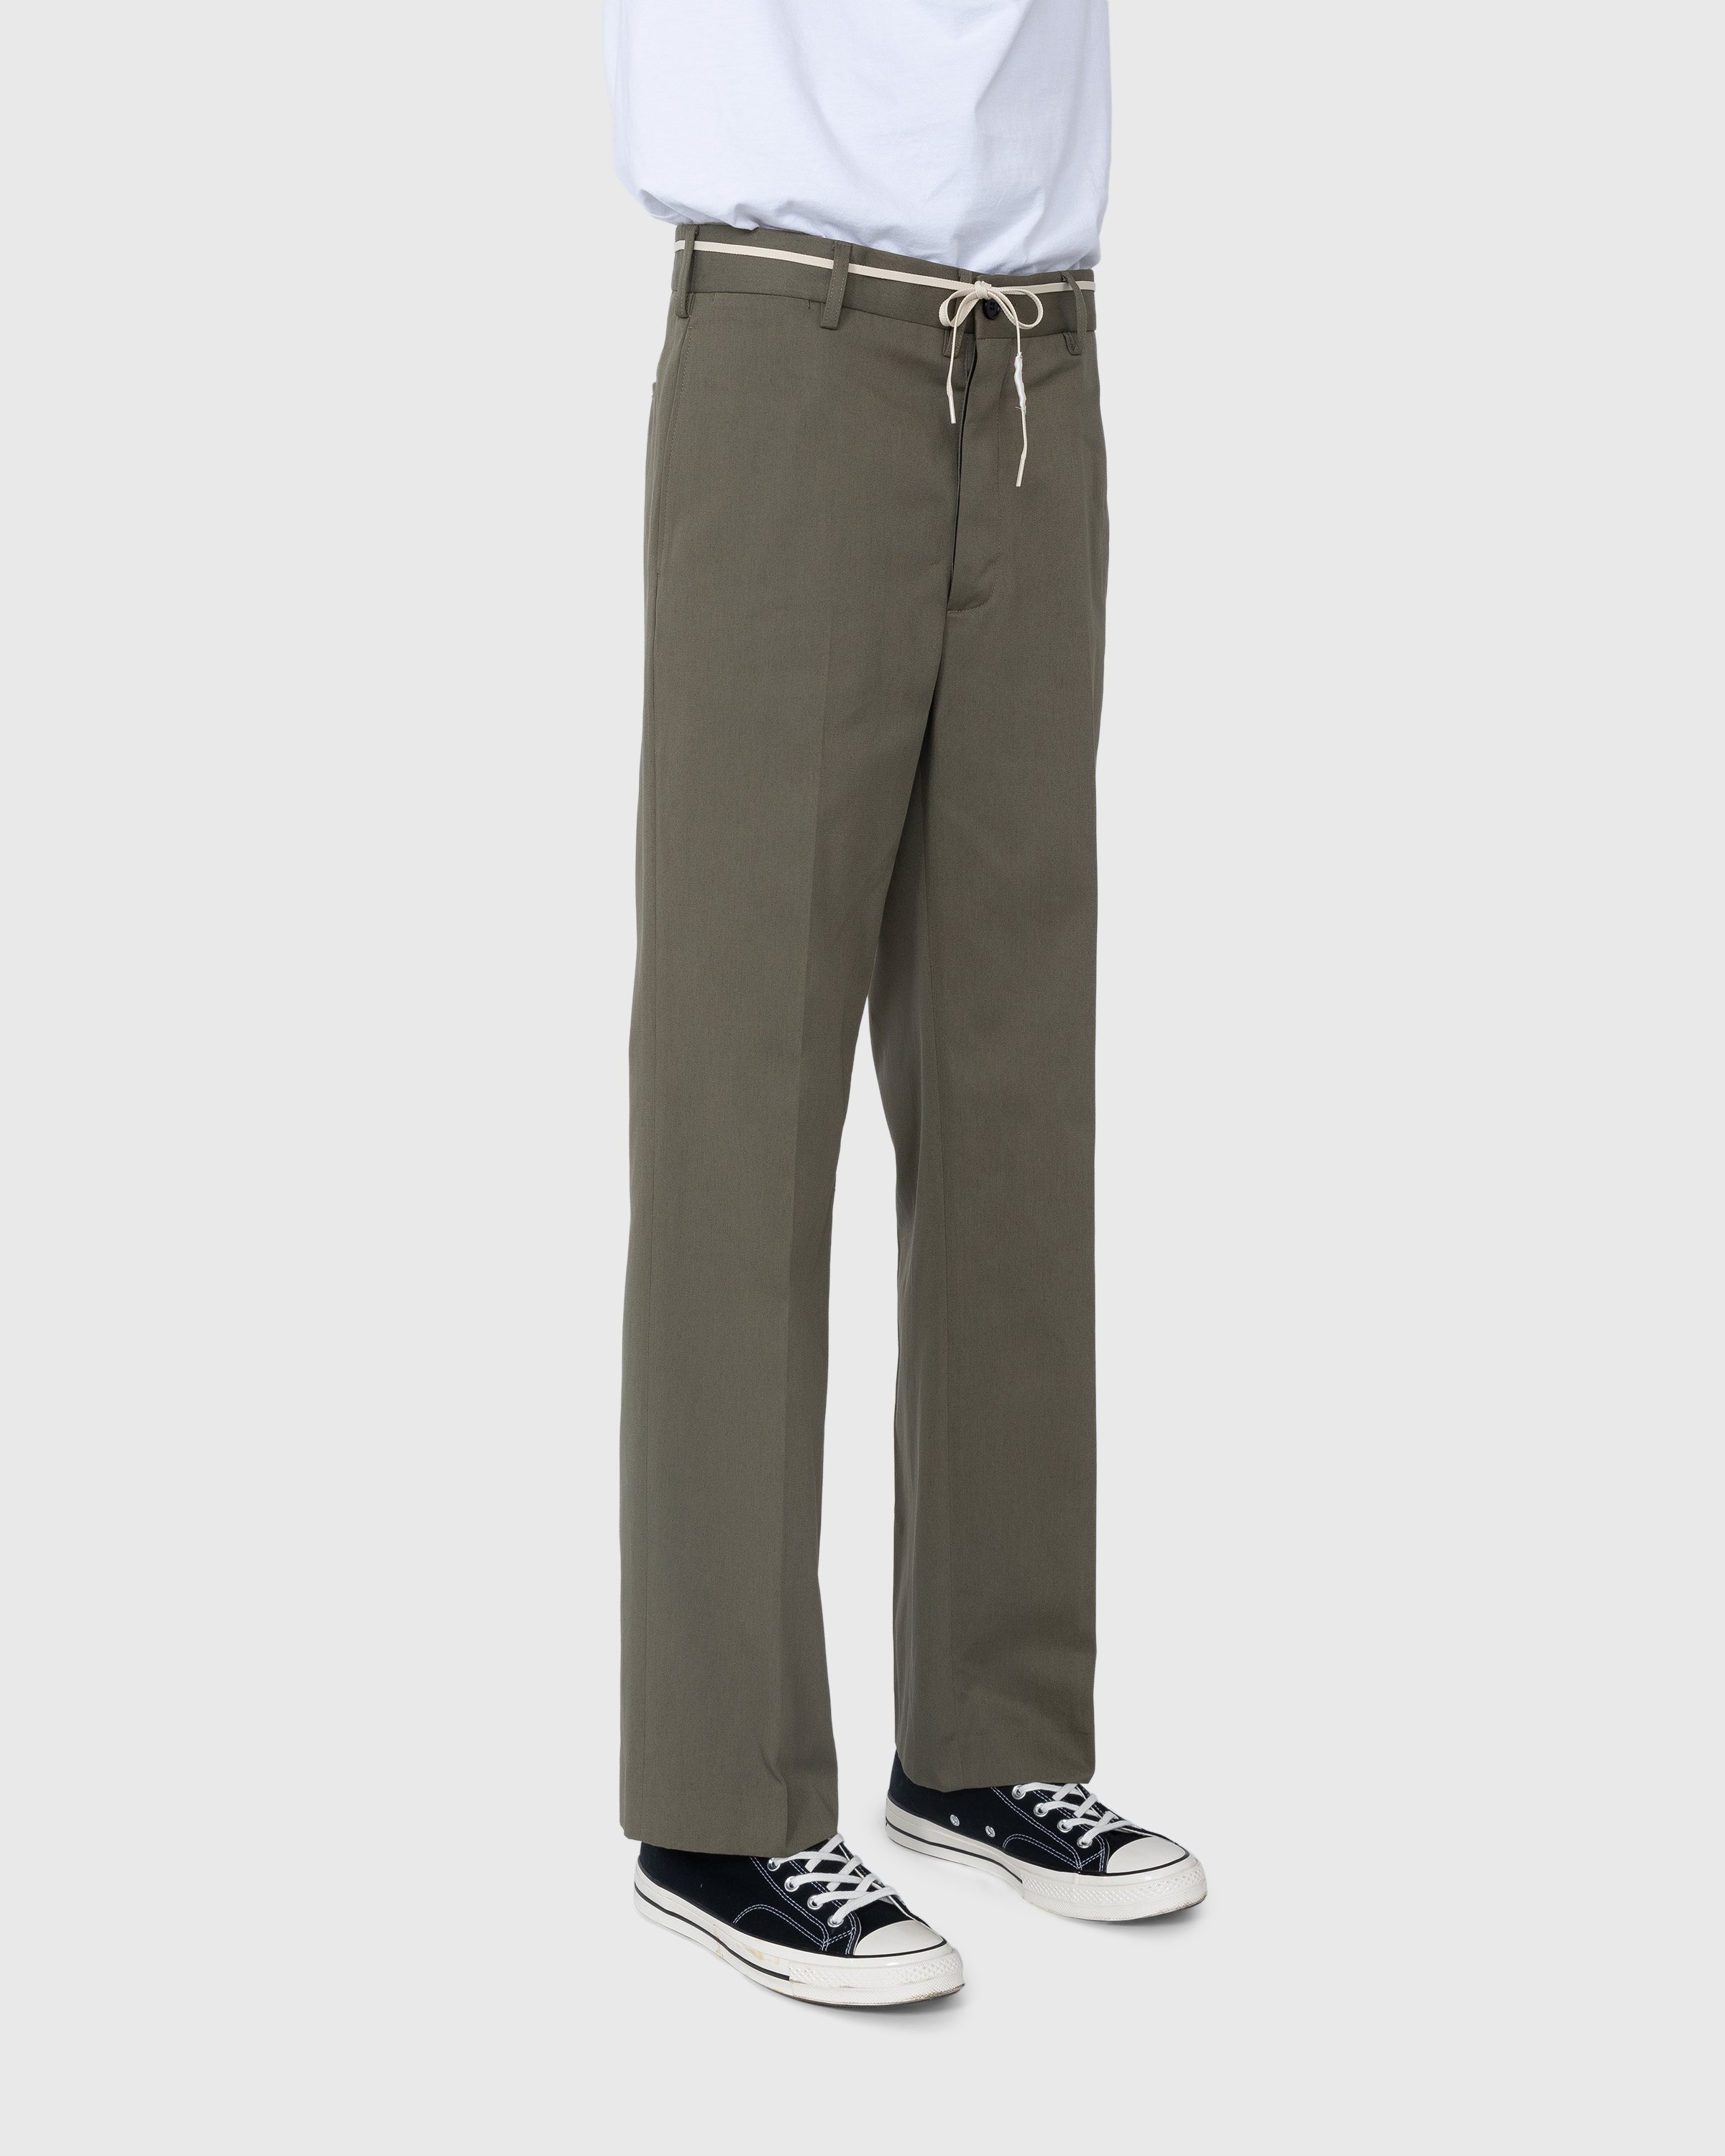 Marni – Gabardine Cotton Cropped Trousers Stone Green - Pants - Green - Image 2